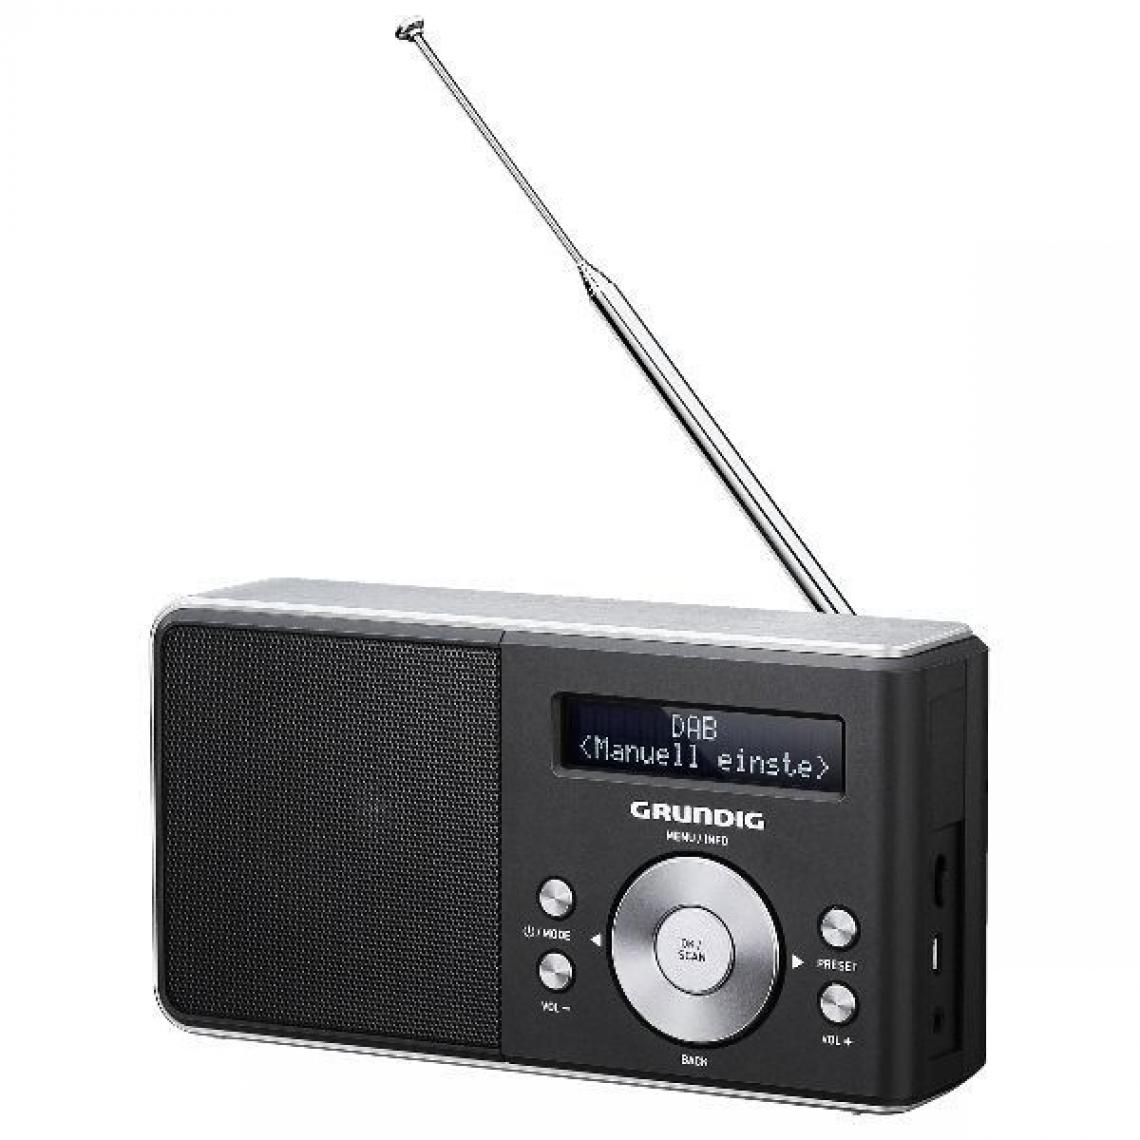 Grundig - grundig - music50dabb - Radio